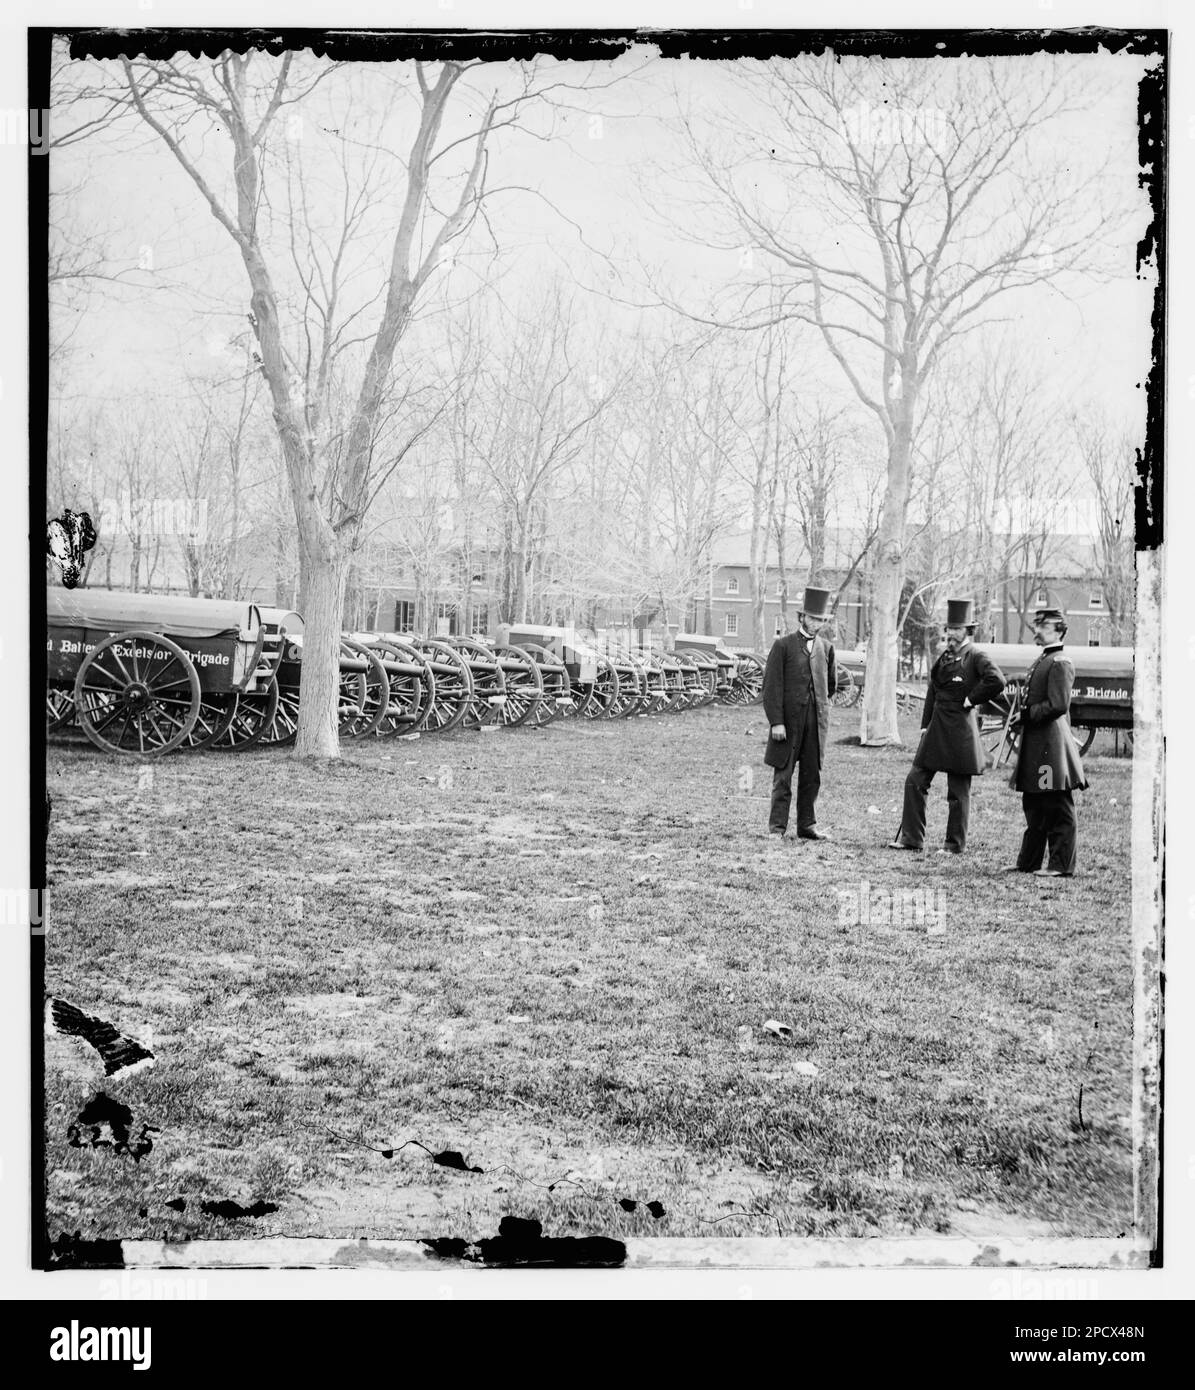 Washington, District of Columbia. Wiard gun at U.S. Arsenal. (L to R: General Daniel Sickles, N.P. Willis, H.L. Stuart). Civil war photographs, 1861-1865 . United States, History, Civil War, 1861-1865. Stock Photo